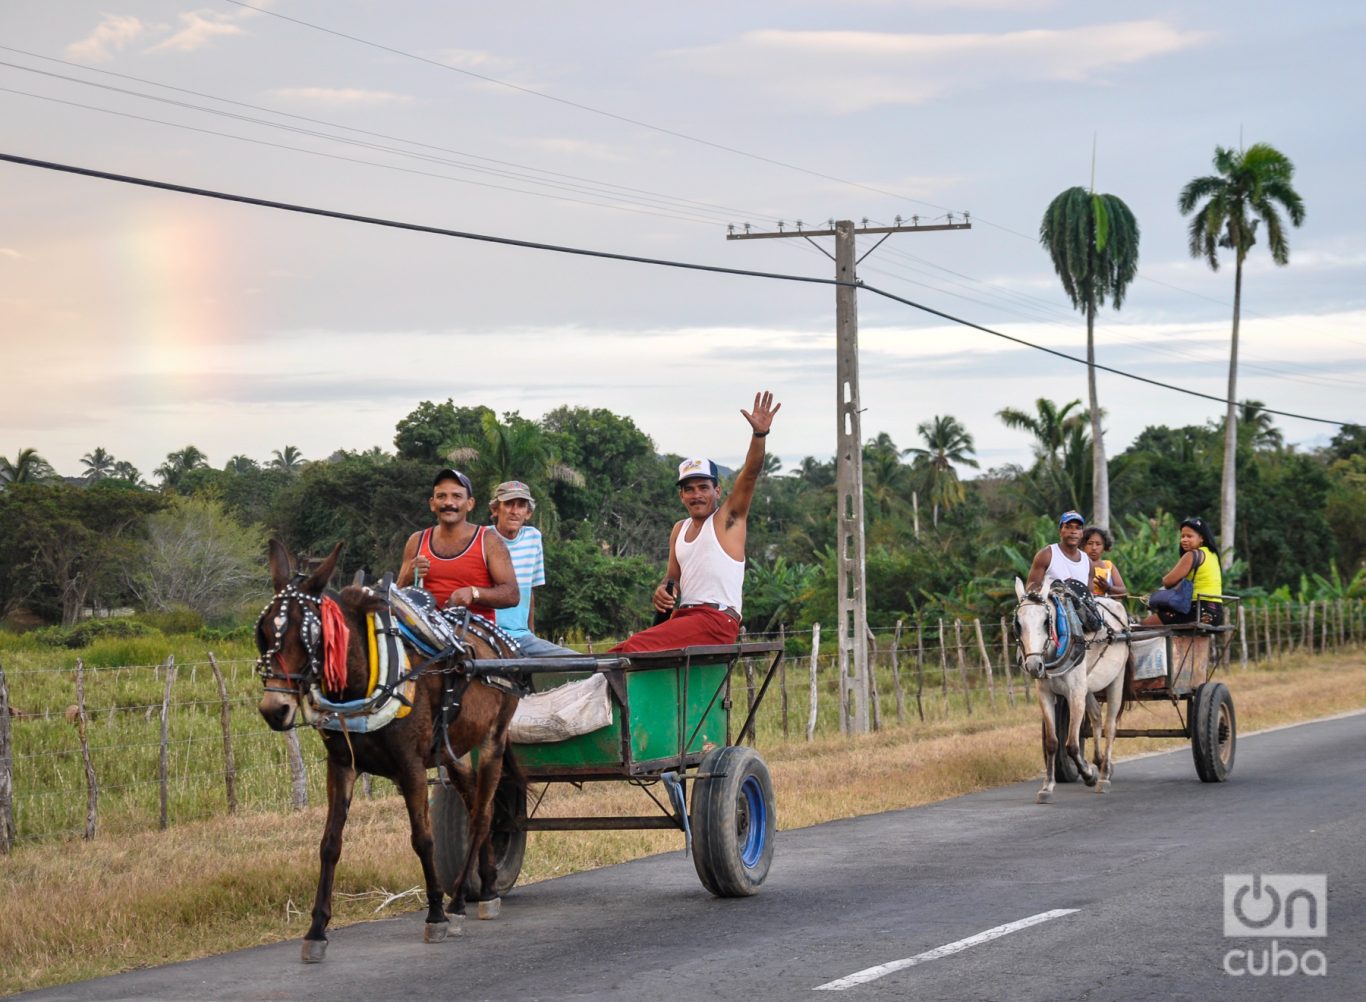 Carretones de caballos por la carretera de la Gran piedra, en Santiago de Cuba. Foto: Kaloian.
